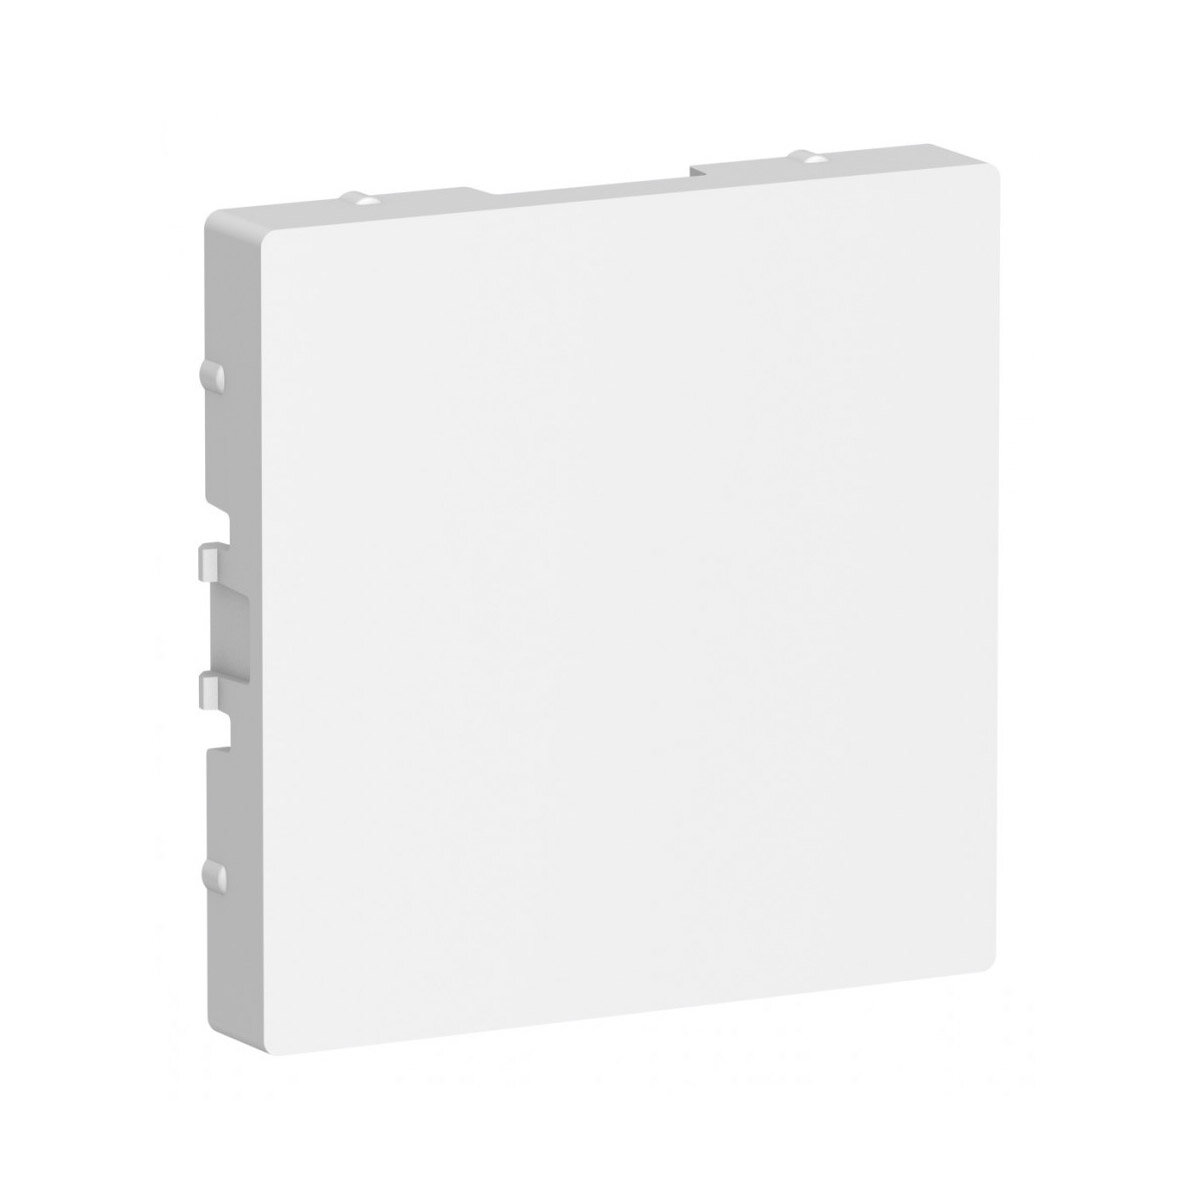 Заглушка без суппорта Schneider Electric Atlasdesign, для многопостовых рамок, белая